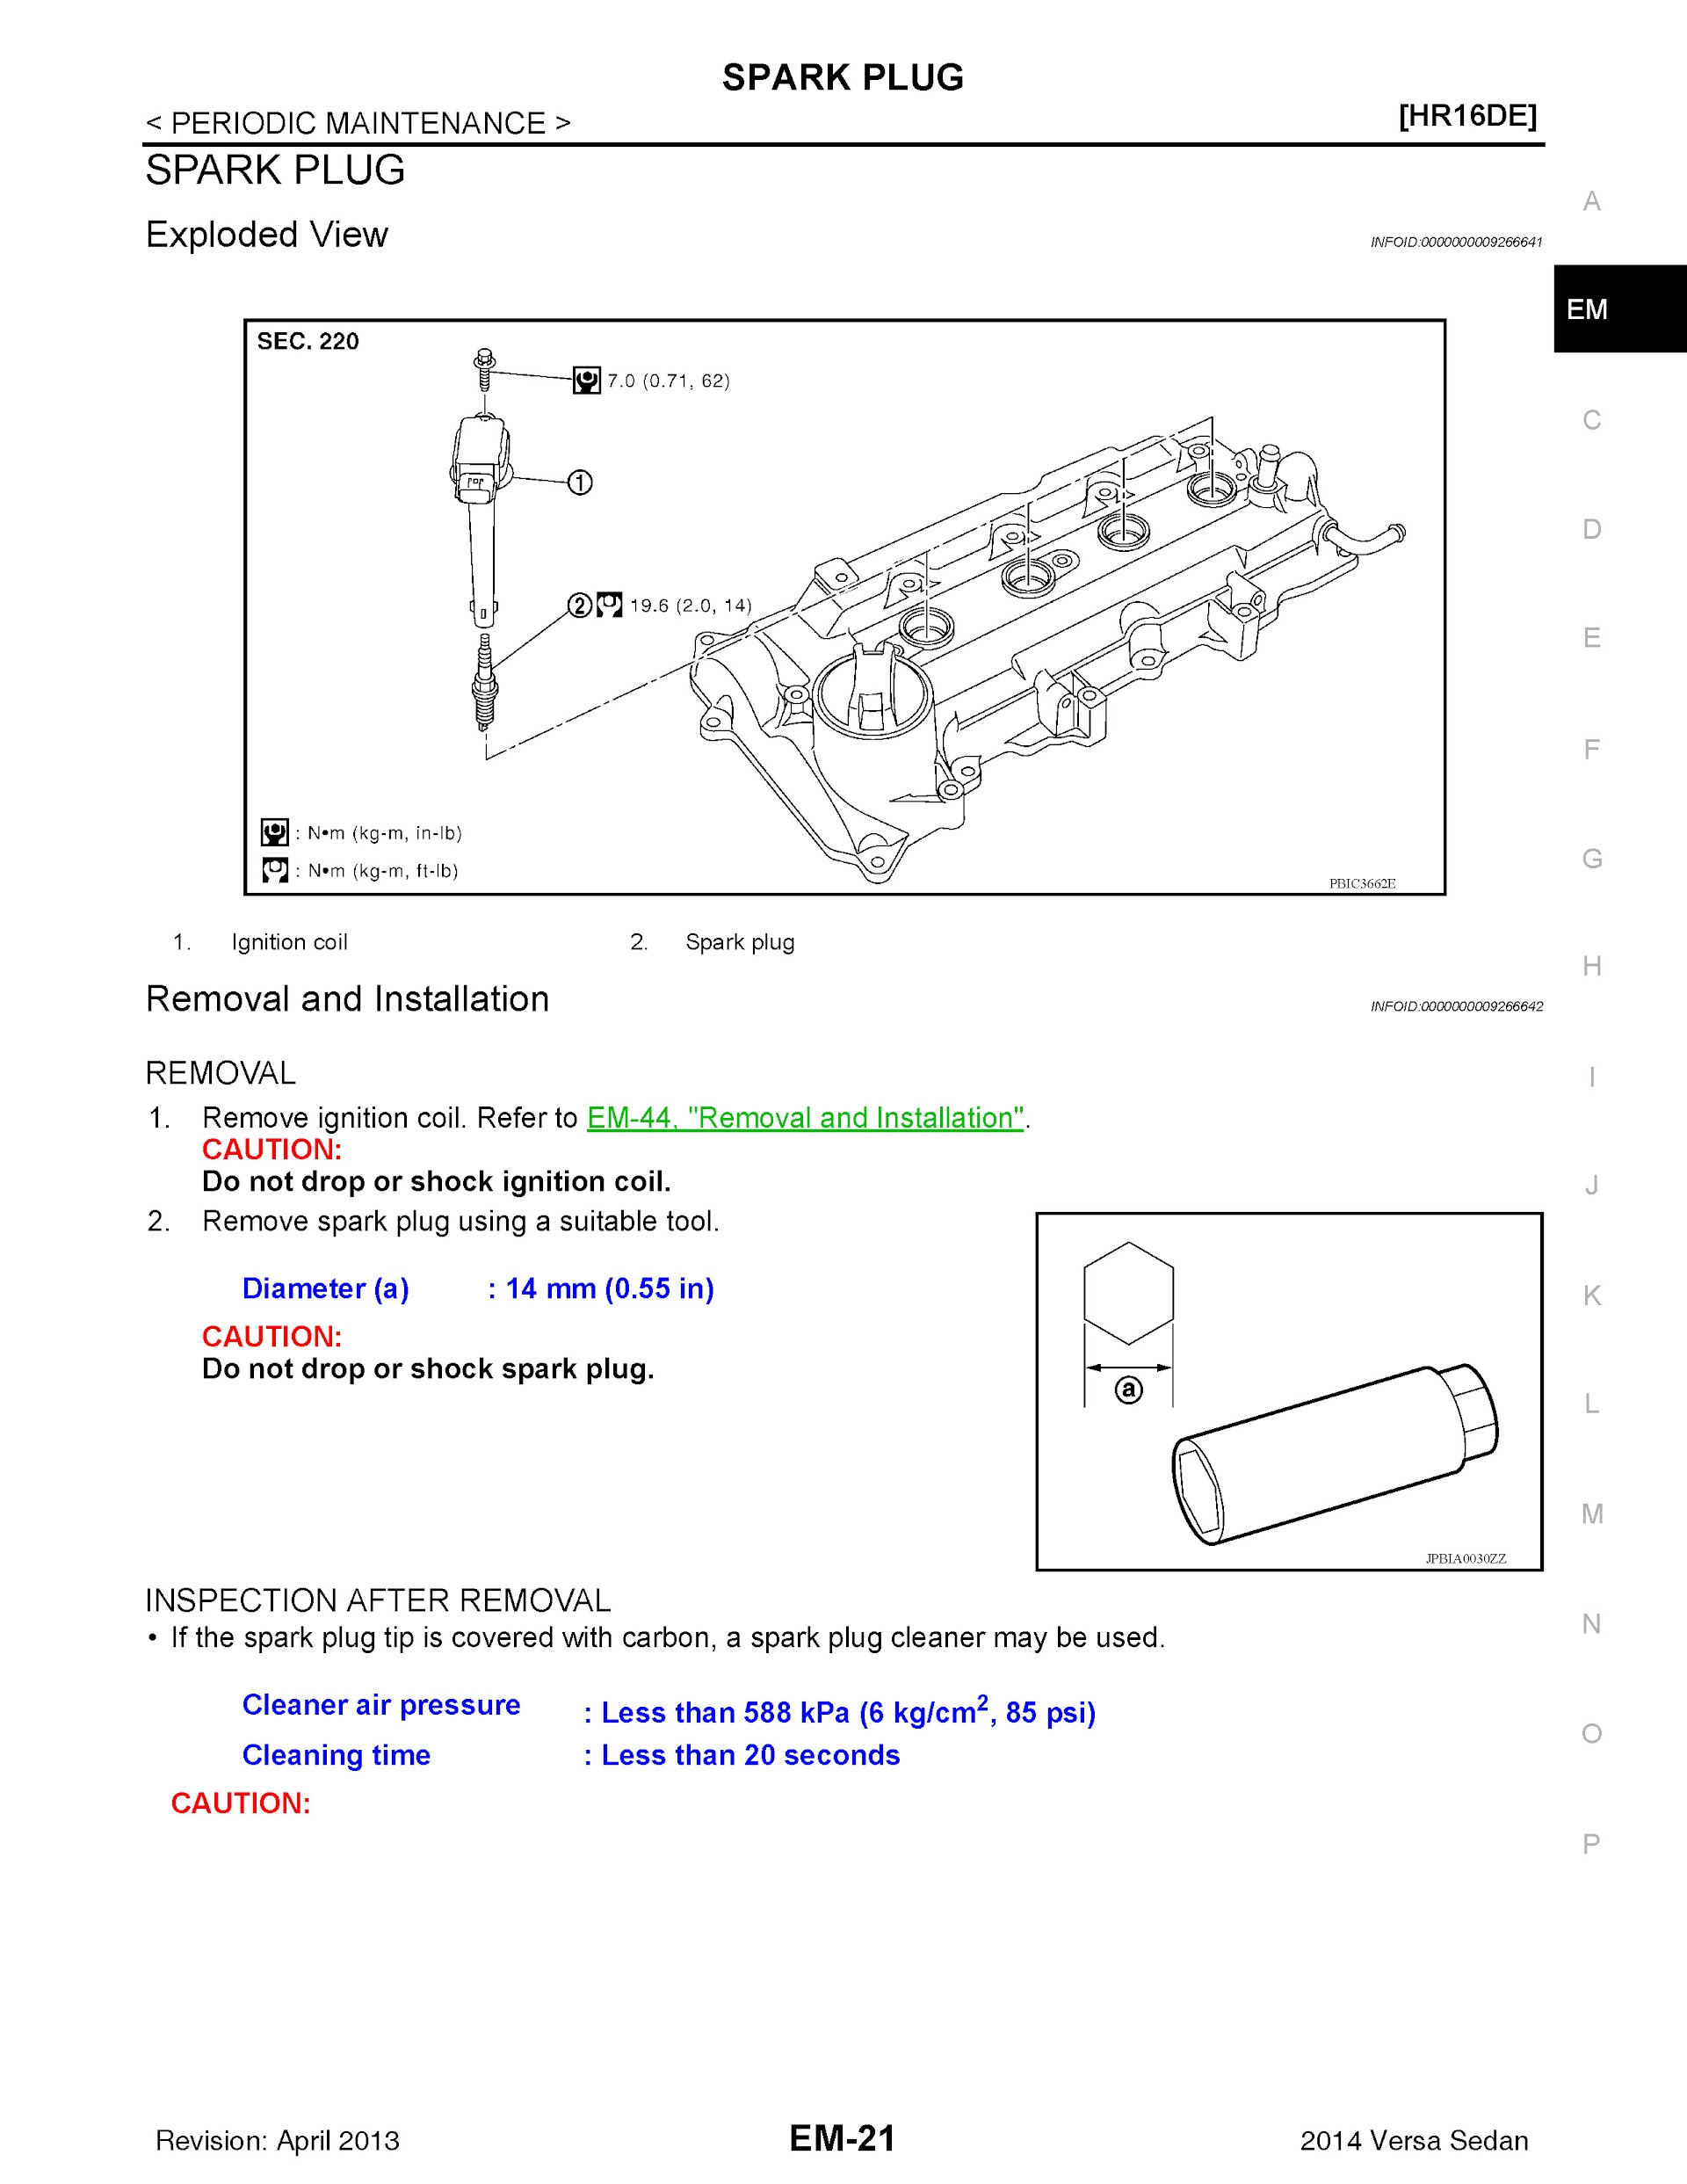 2014 Nissan Versa Sedan Repair Manual, Spark Plug Removal and Installation